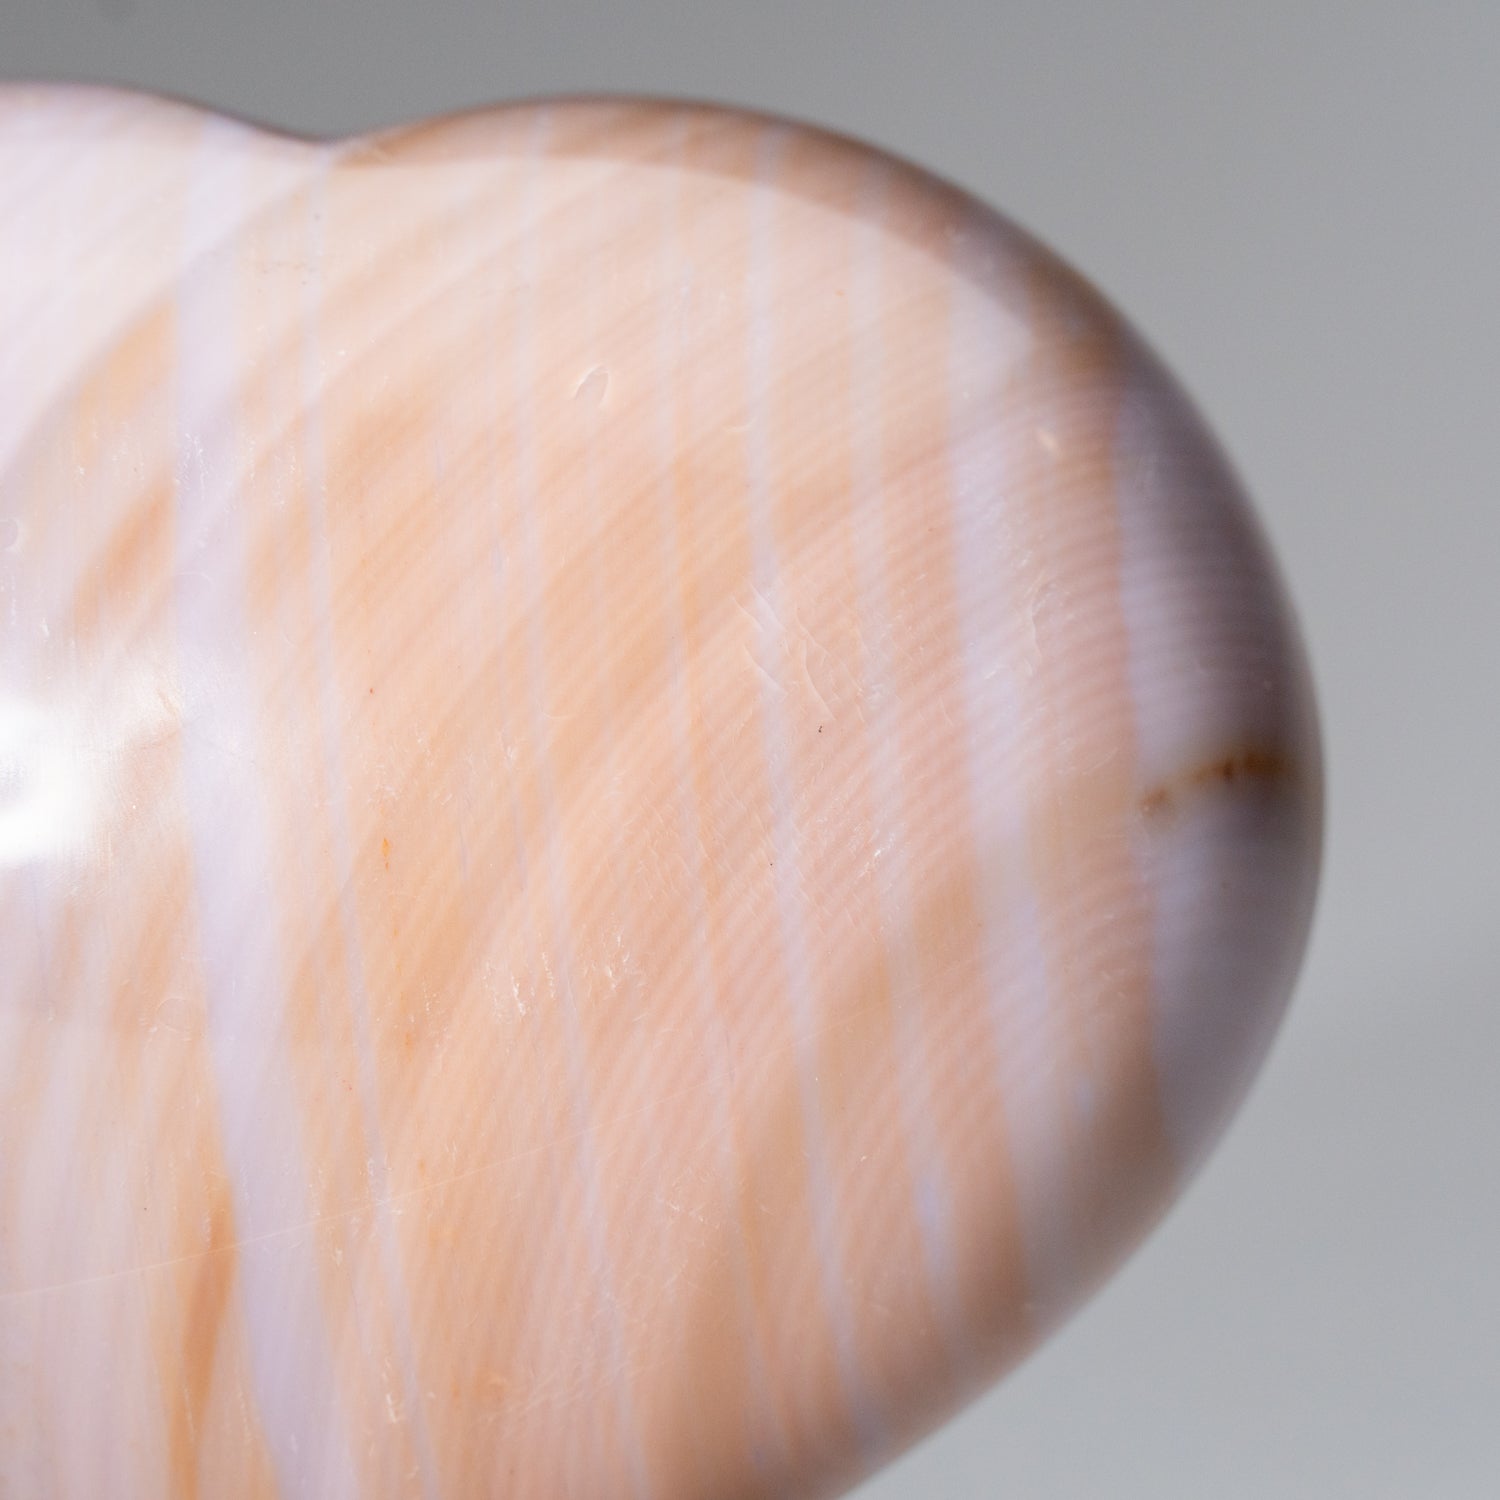 Genuine Polished Polychrome Jasper Heart from Madagascar (279.9 grams)